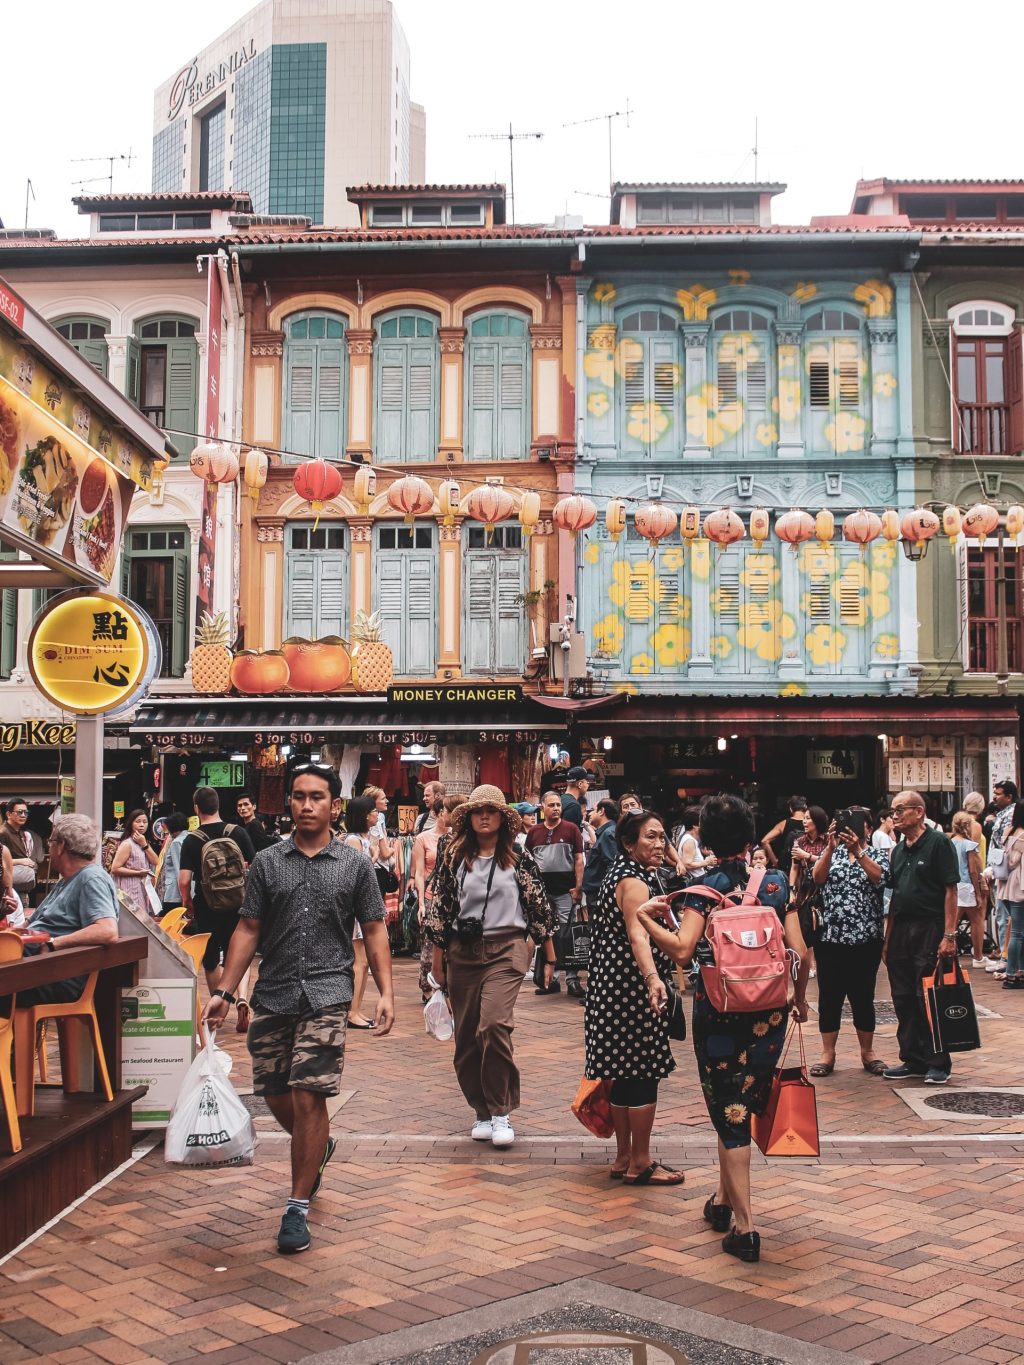 Market Street of Chinetown, Chinatown, Singapore